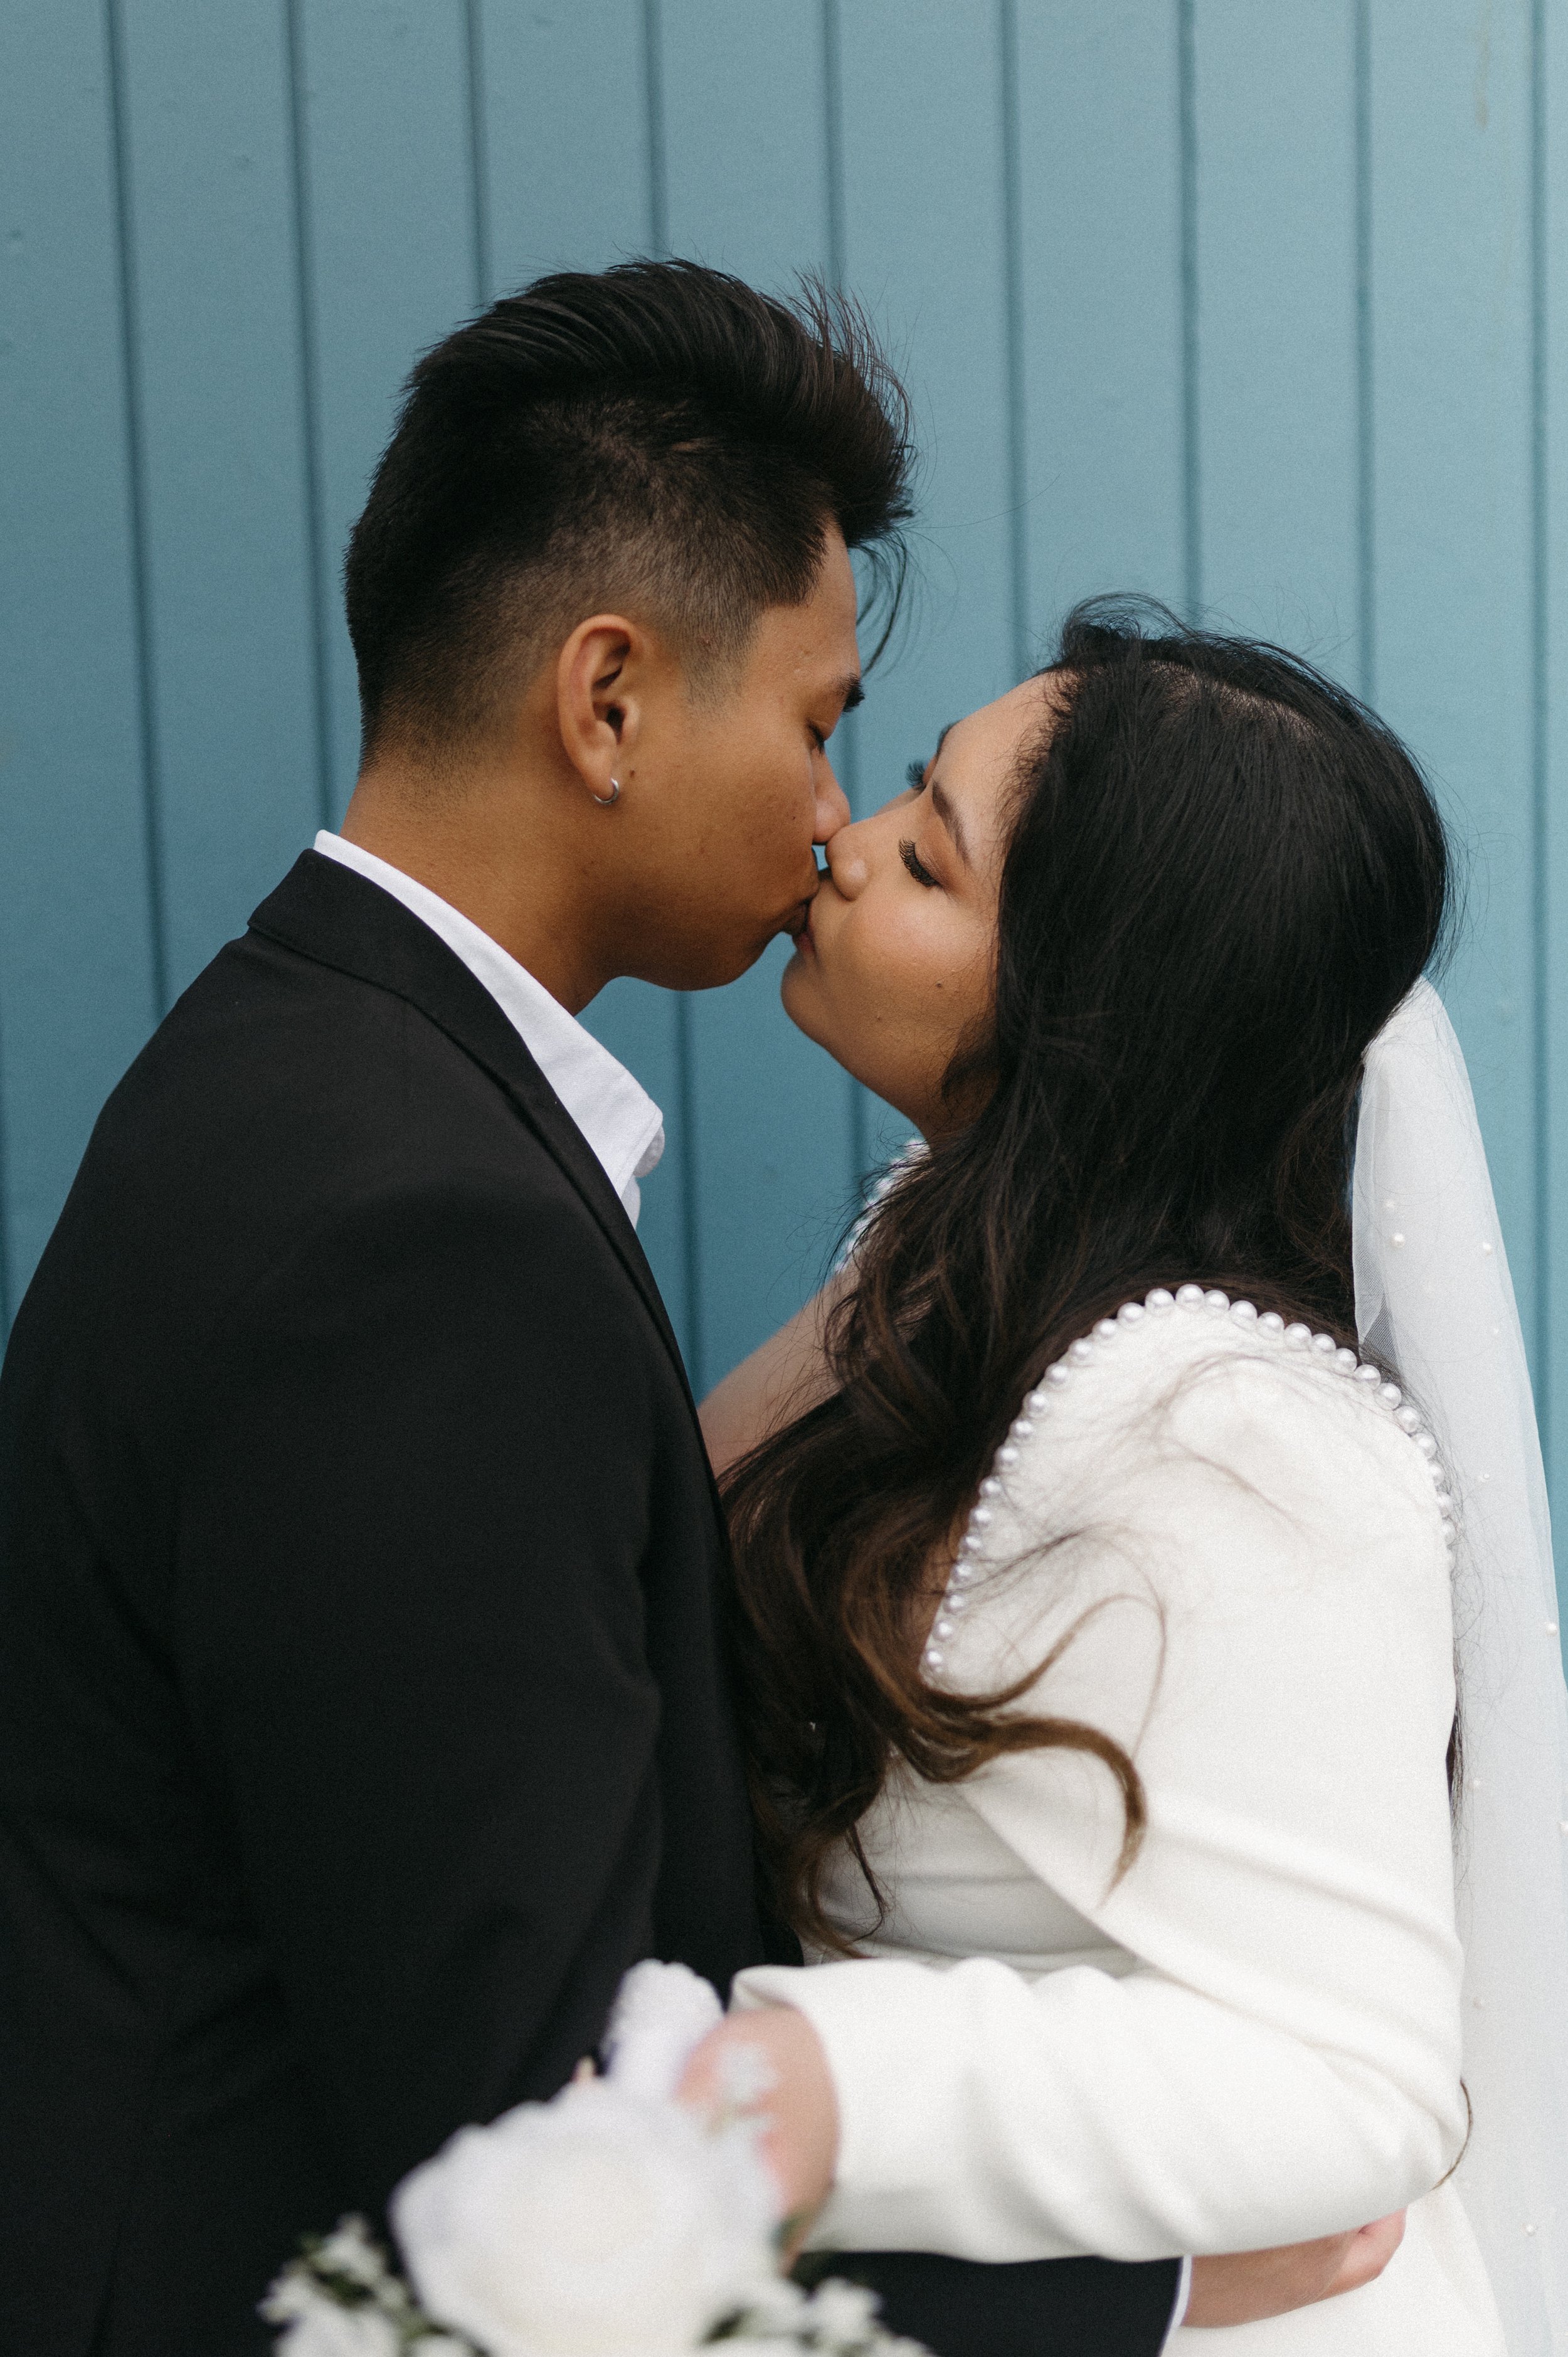 CITY WEDDING BRIDALS IN DOWNTOWN ANCHORAGE, ALASKA